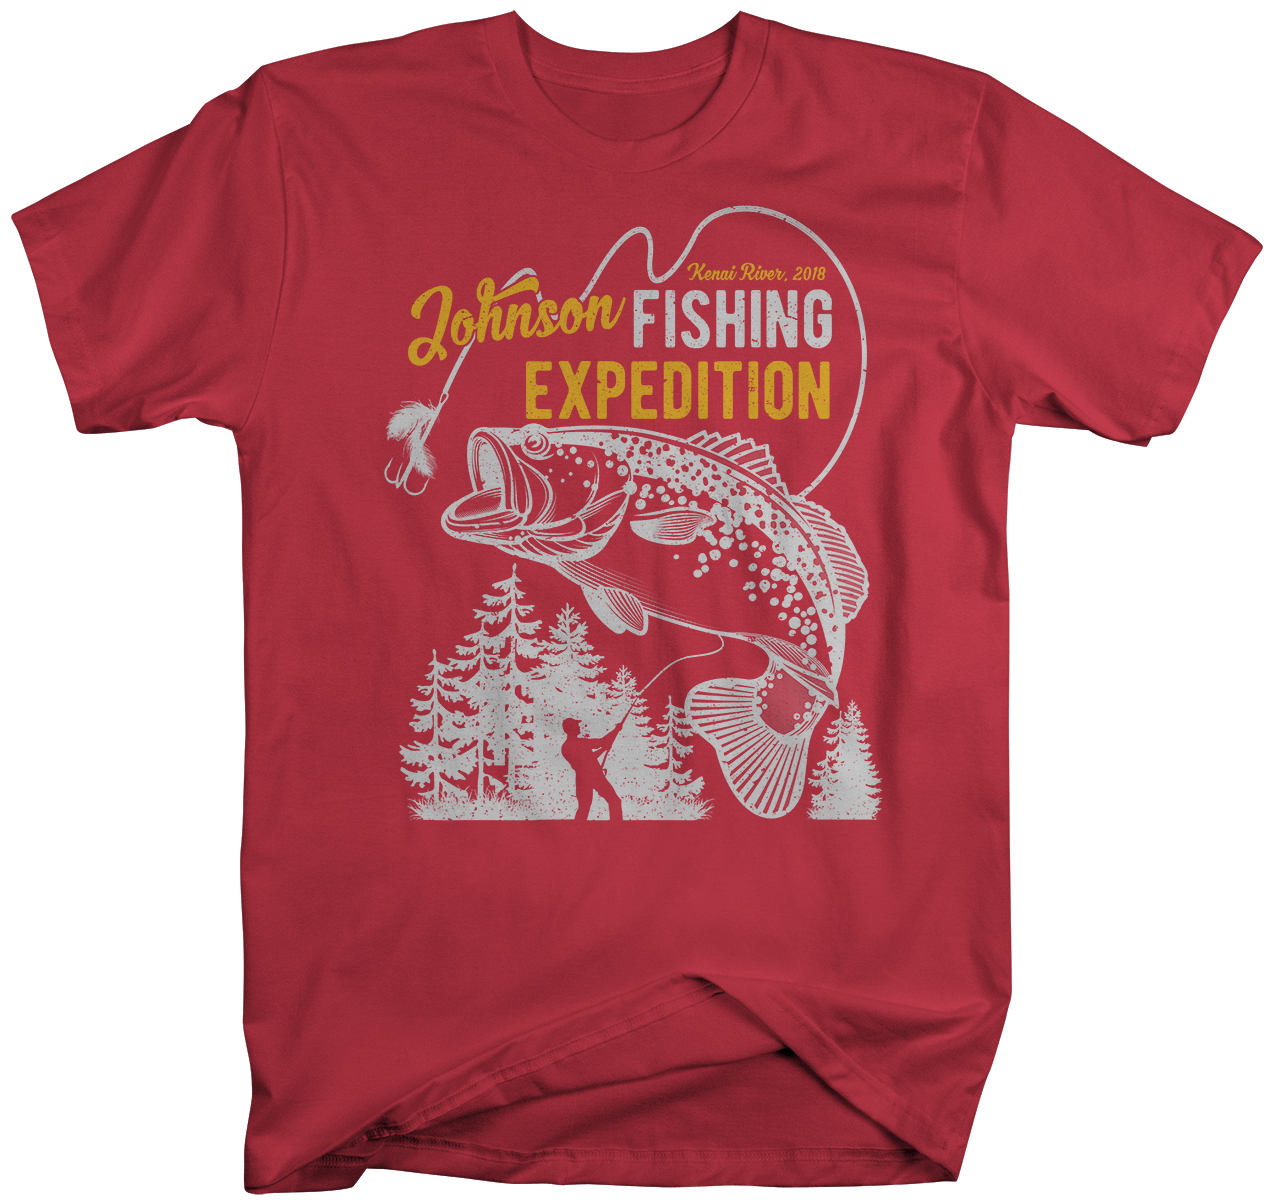 Personalized Fishing T-shirt Fisherman Trip Expedition Tee Shirt